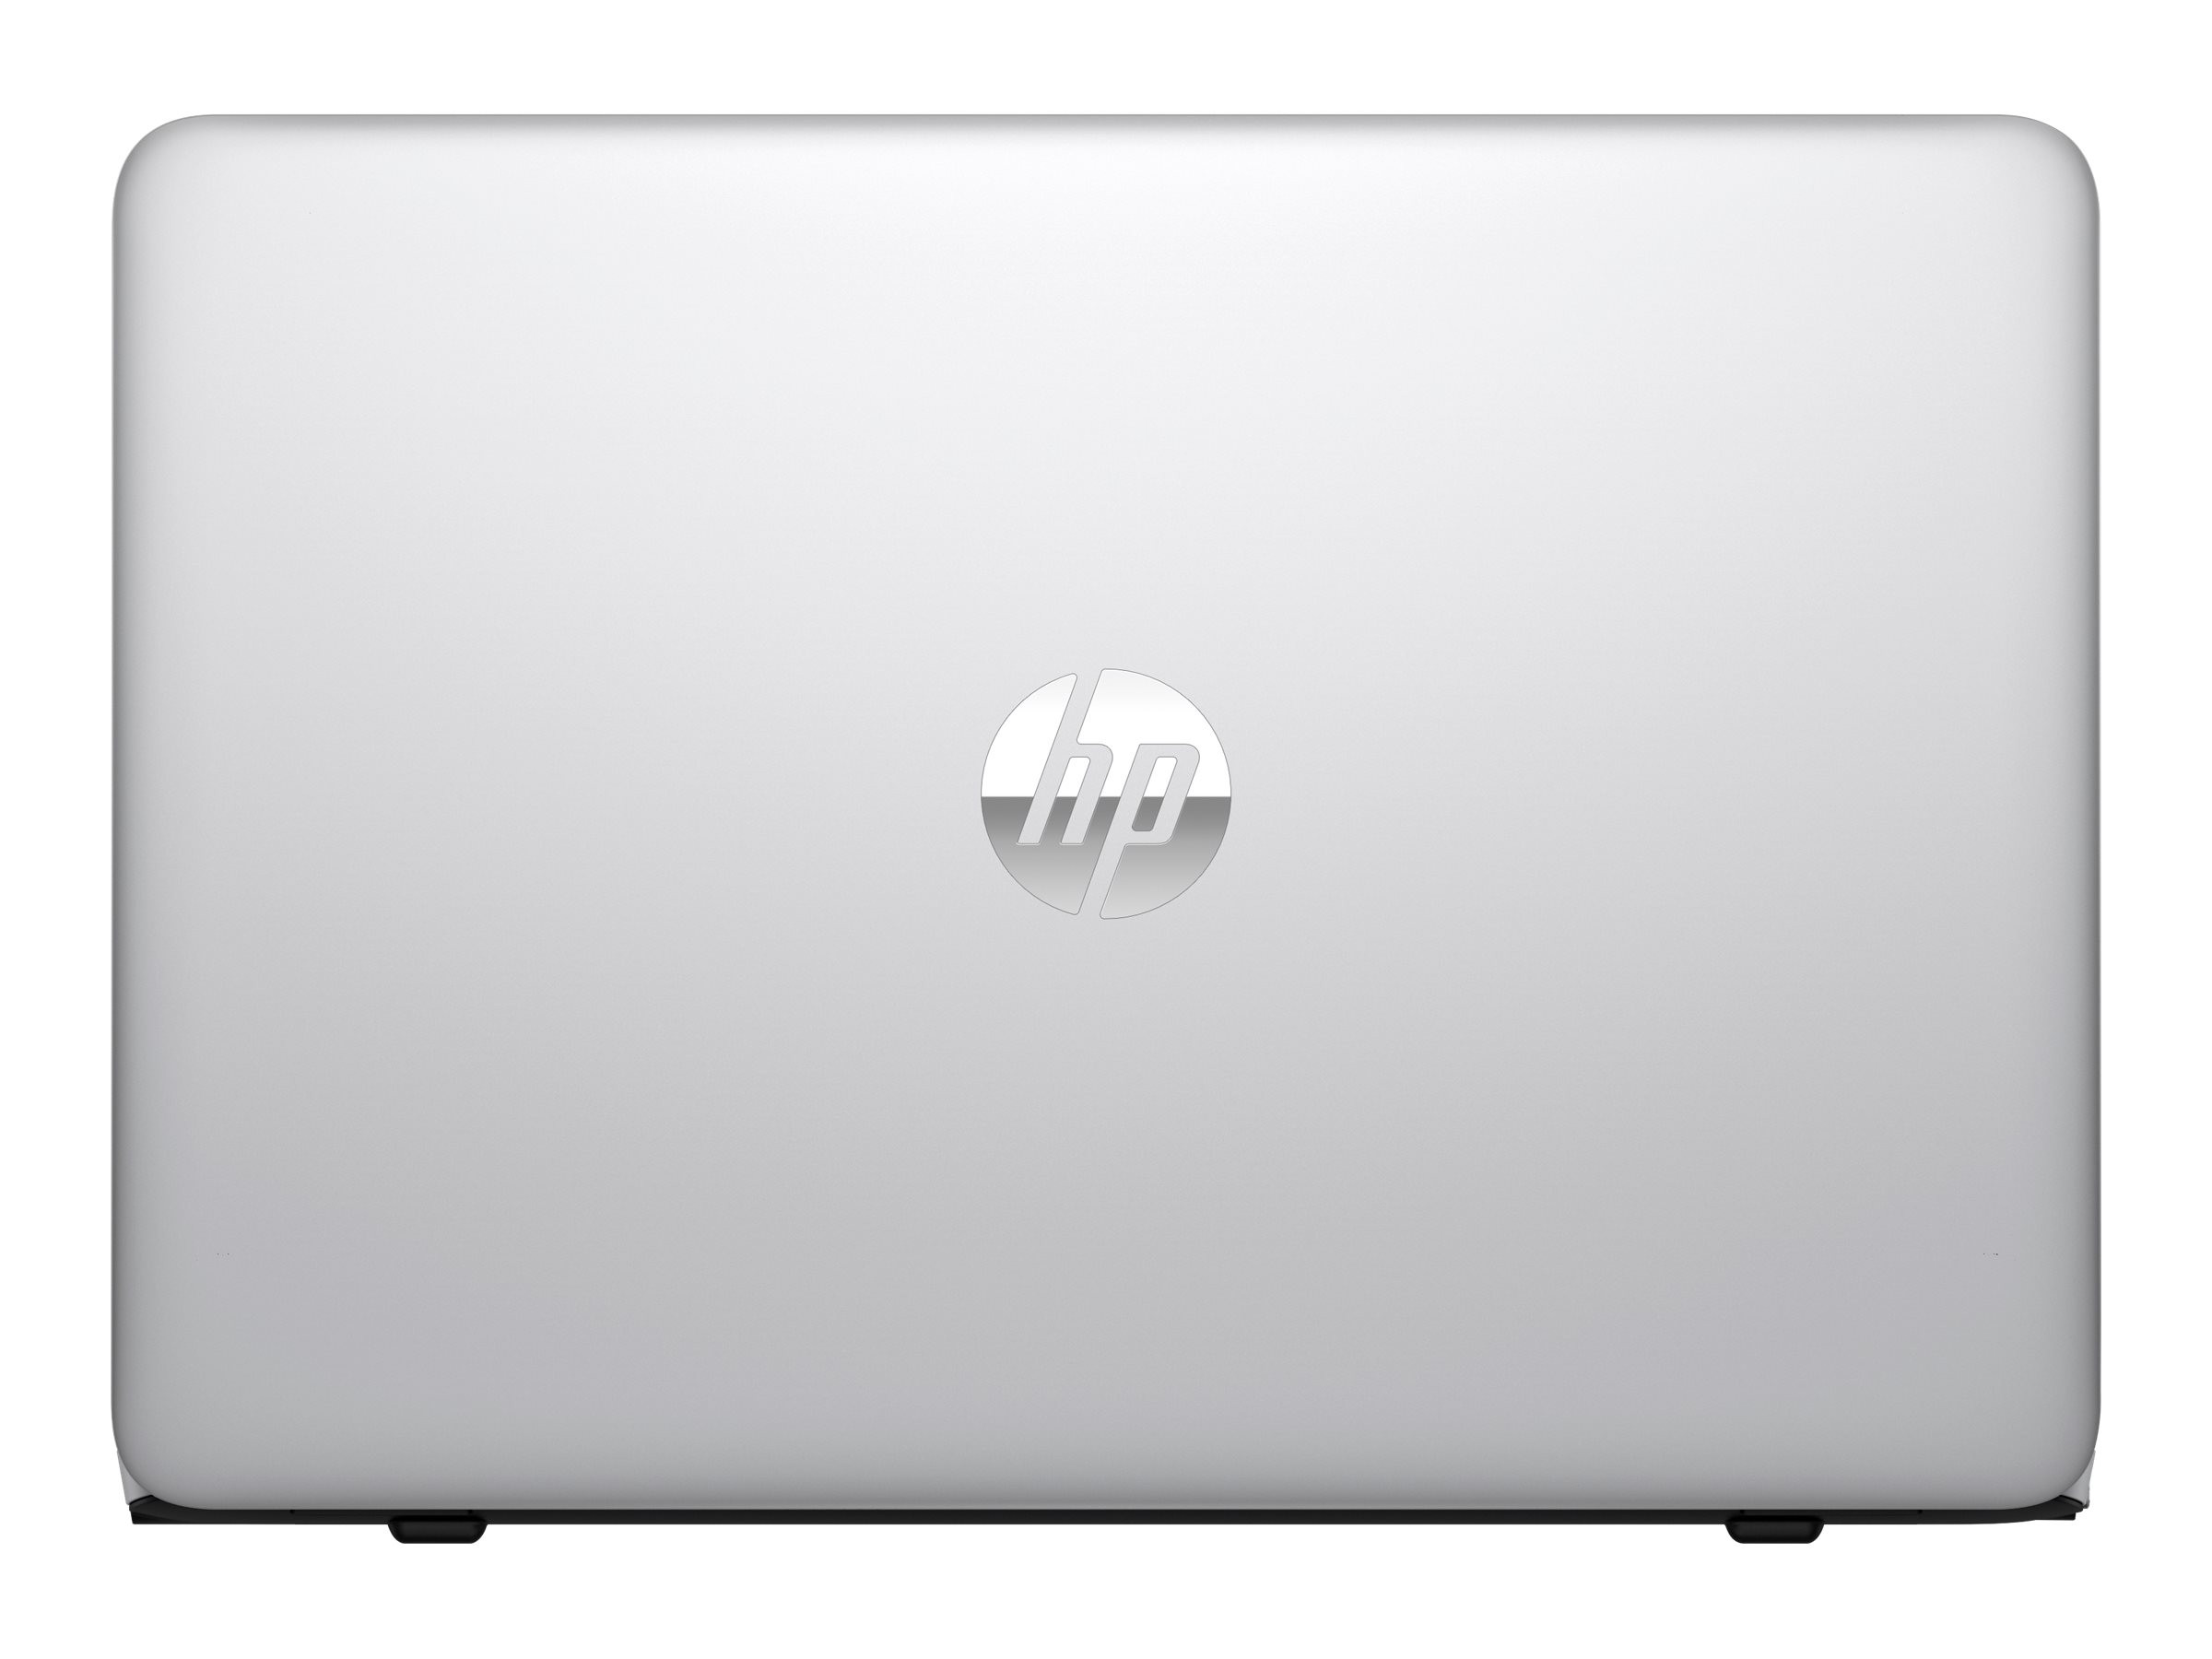 HP EliteBook 840r G4 14" FHD Touch Intel Core i5-7300U 2.60GHz 16GB RAM 256GB SSD Windows 10 Pro